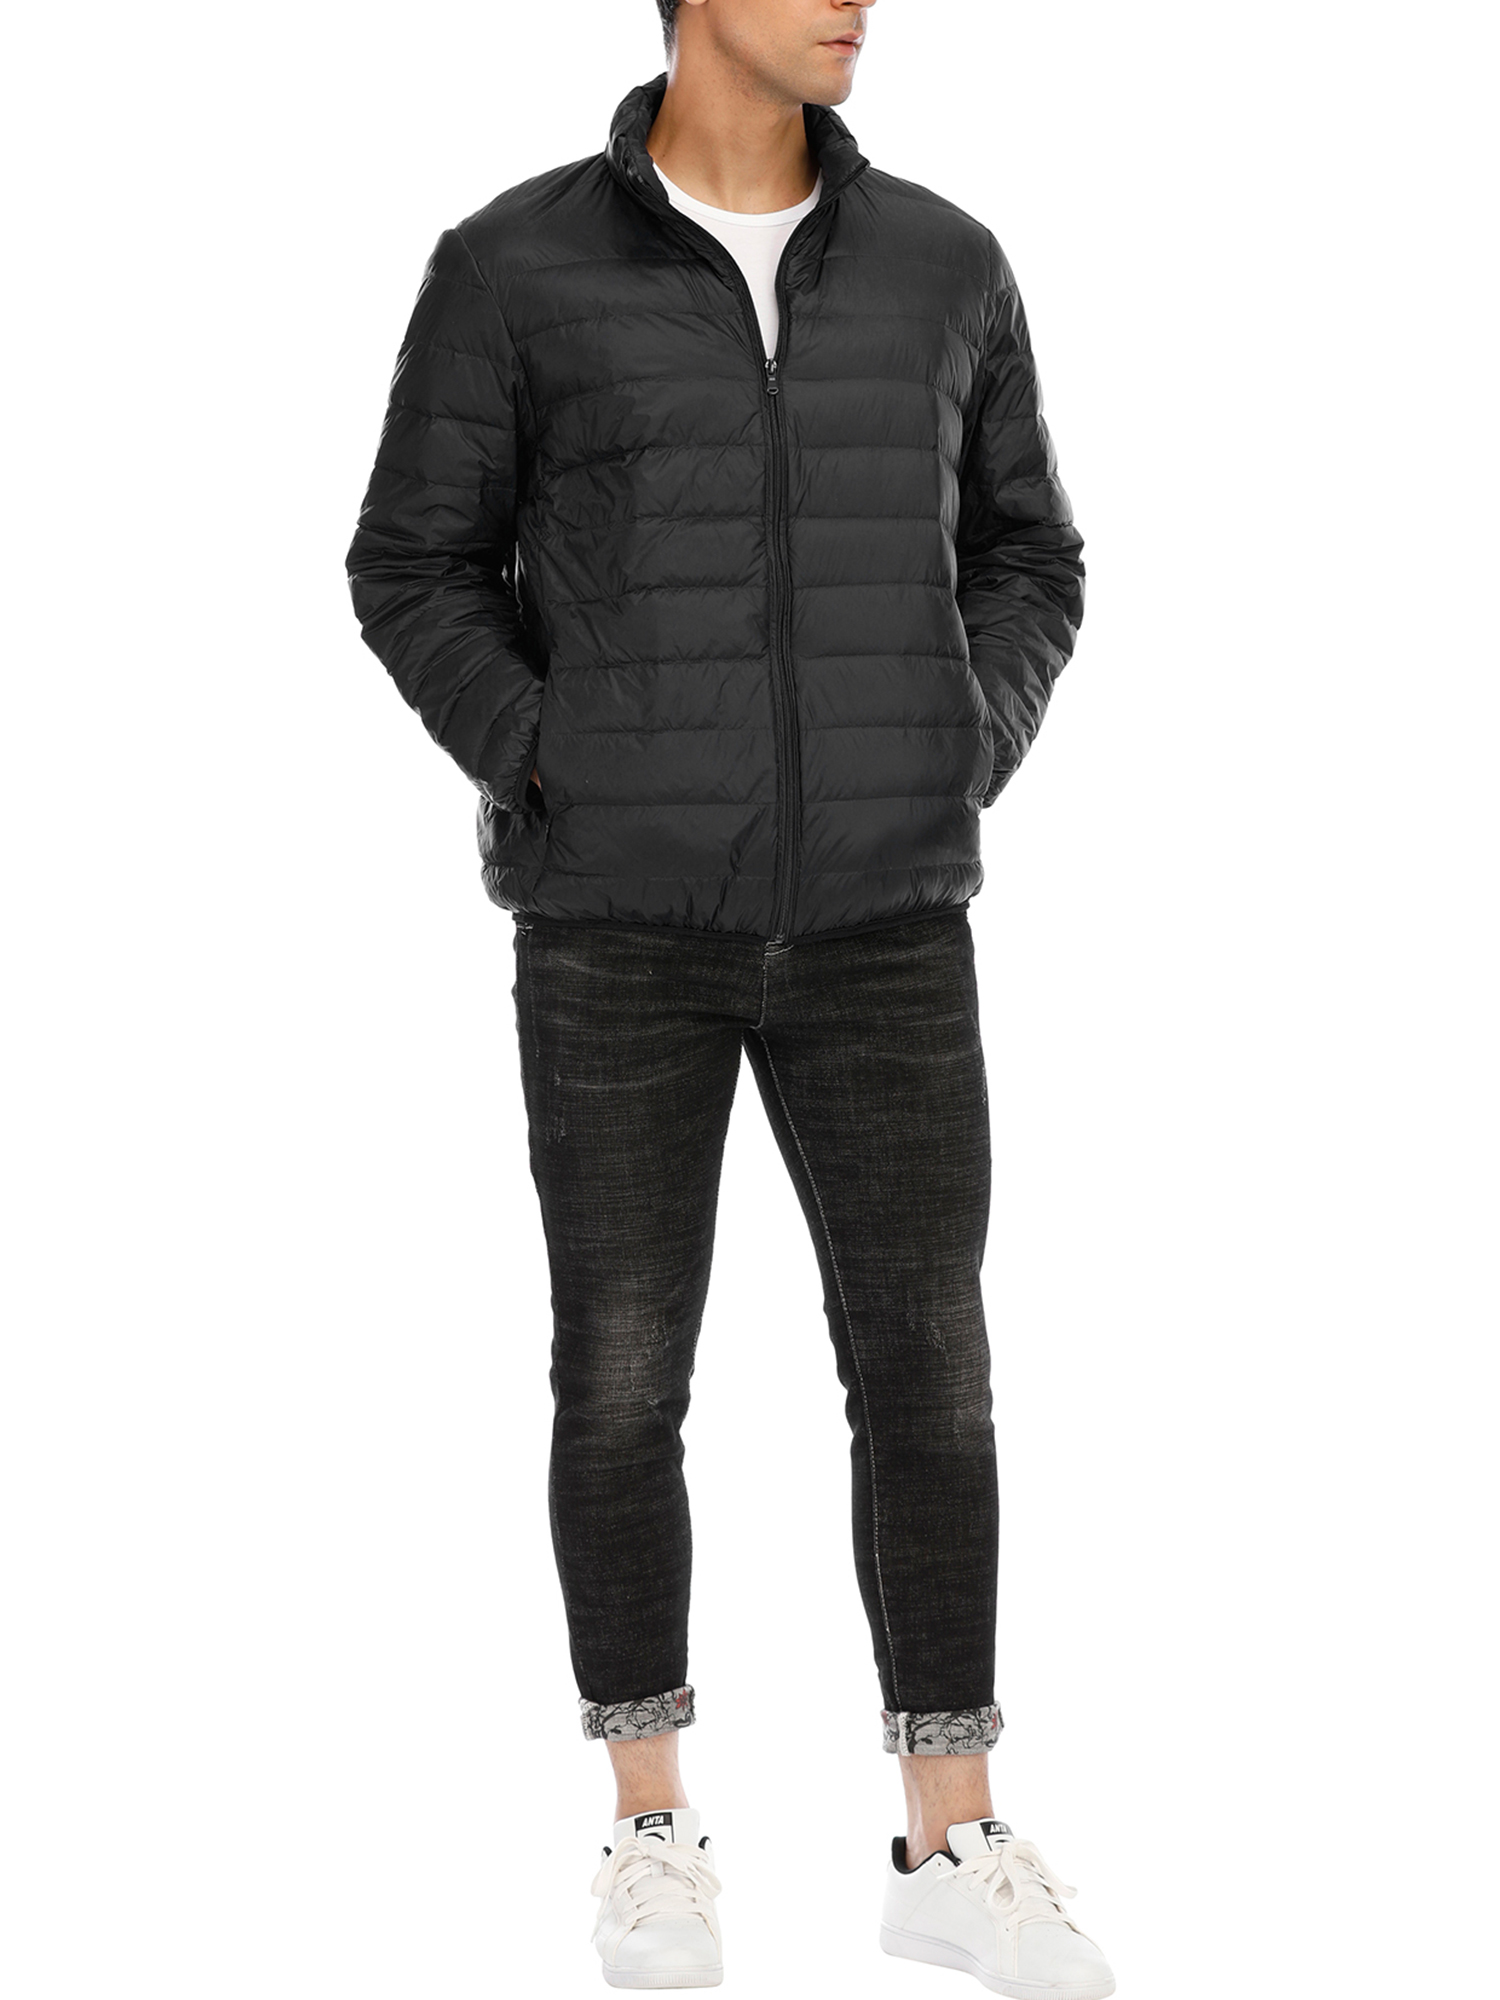 Mens Packable Down Puffer Jacket Lightweight, Water-Resistent Zipper Jackets Windproof Winter Insulation Puffer Coat Outdoor,Black S-2XL - image 2 of 8